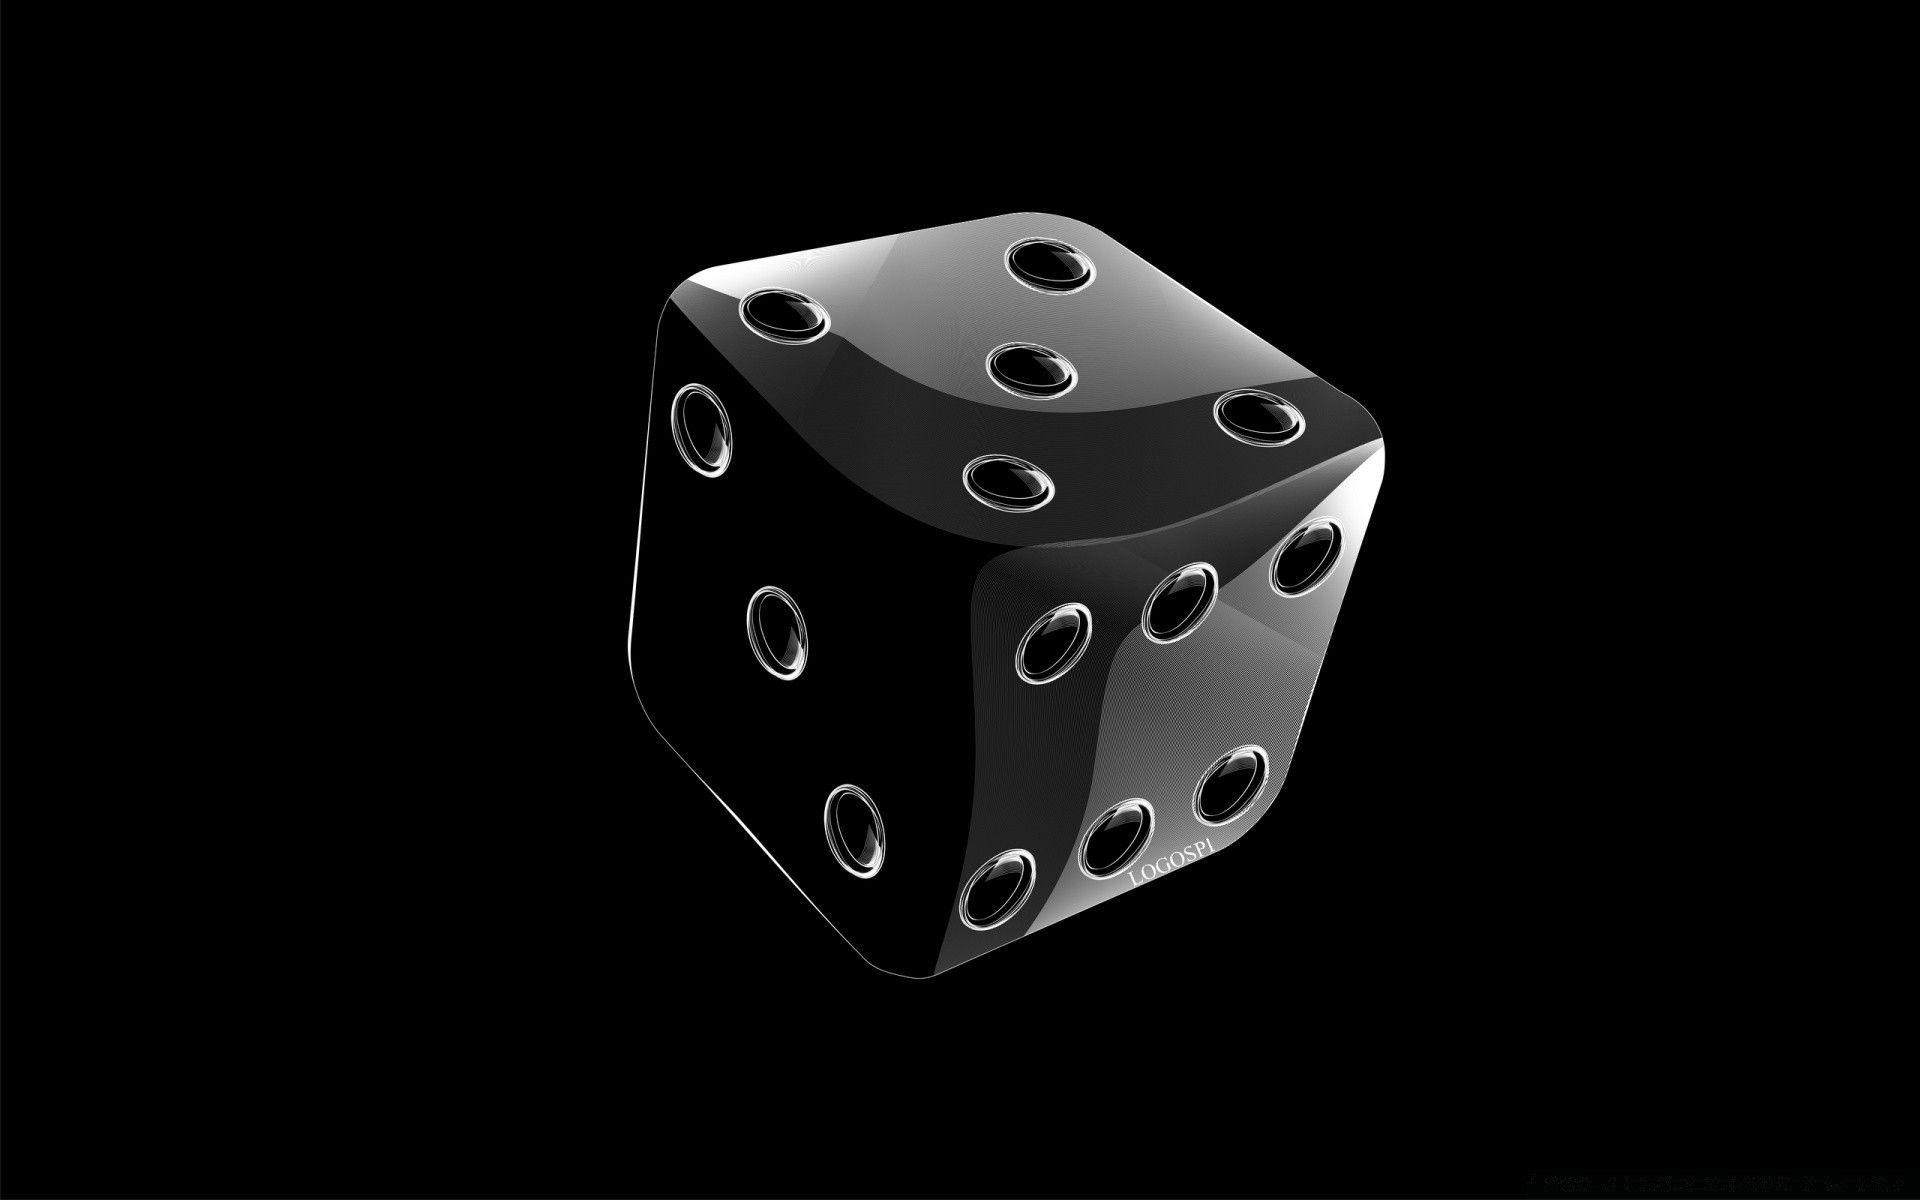 Black dice chance luck casino lucky gambling die desktop HD